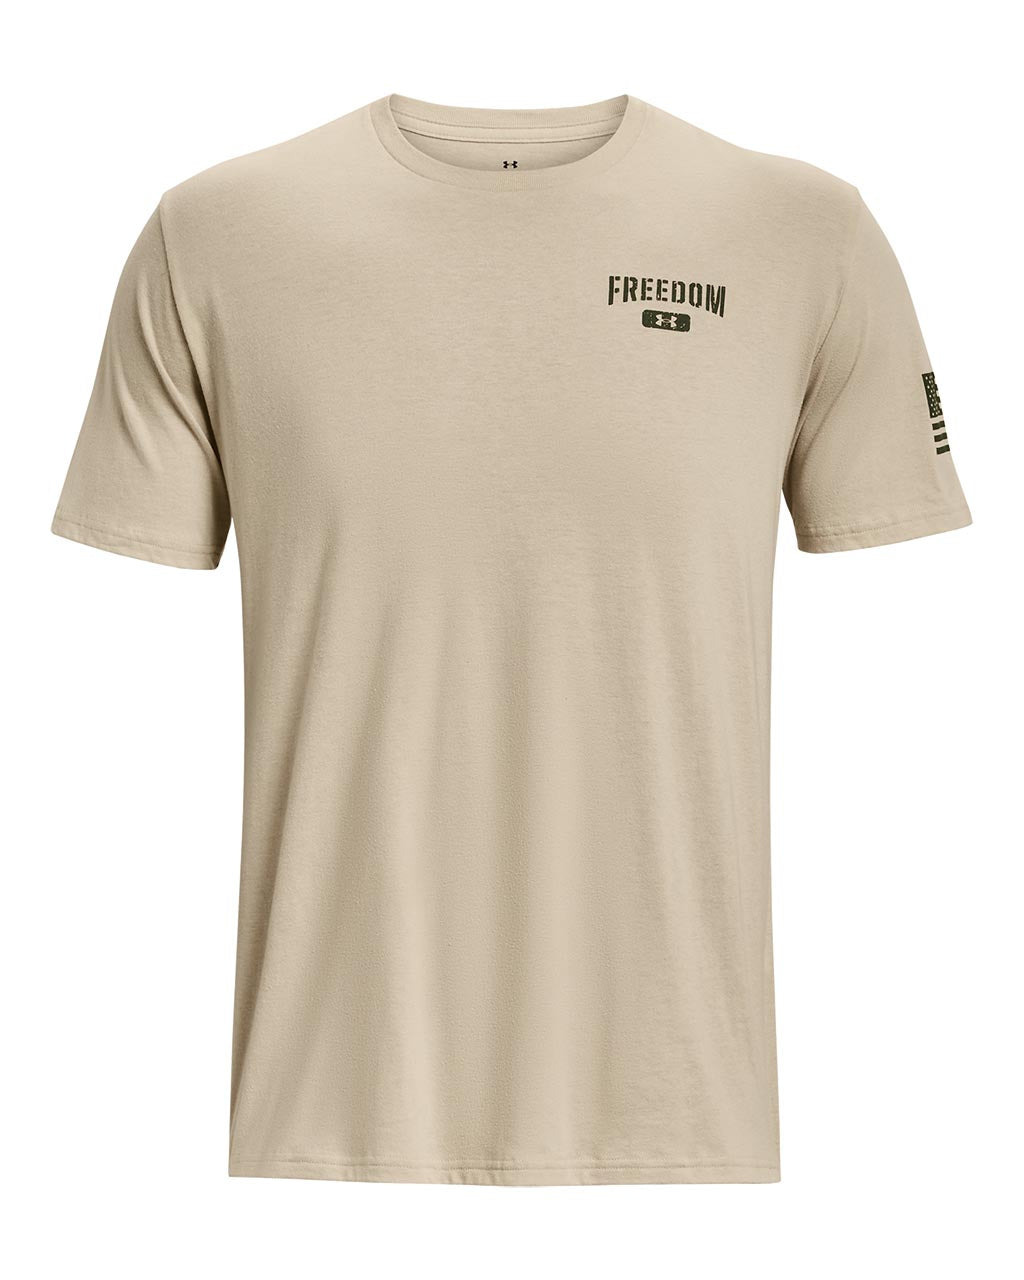 Under Armour Mens Freedom Amp Short Sleeve T-Shirt